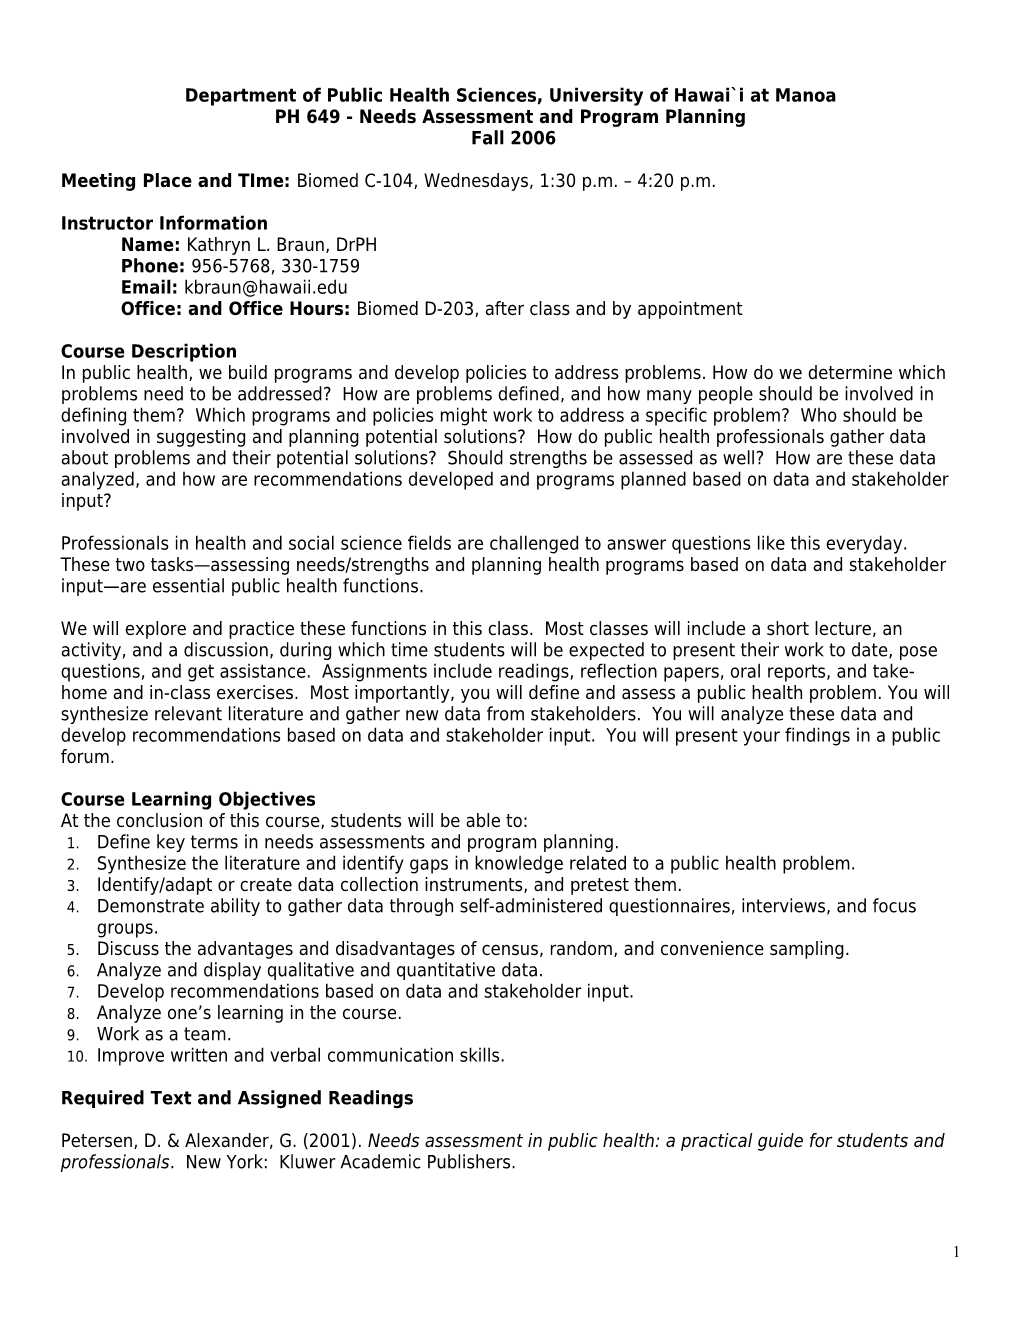 PH 649 Needs Assessment and Program Planning